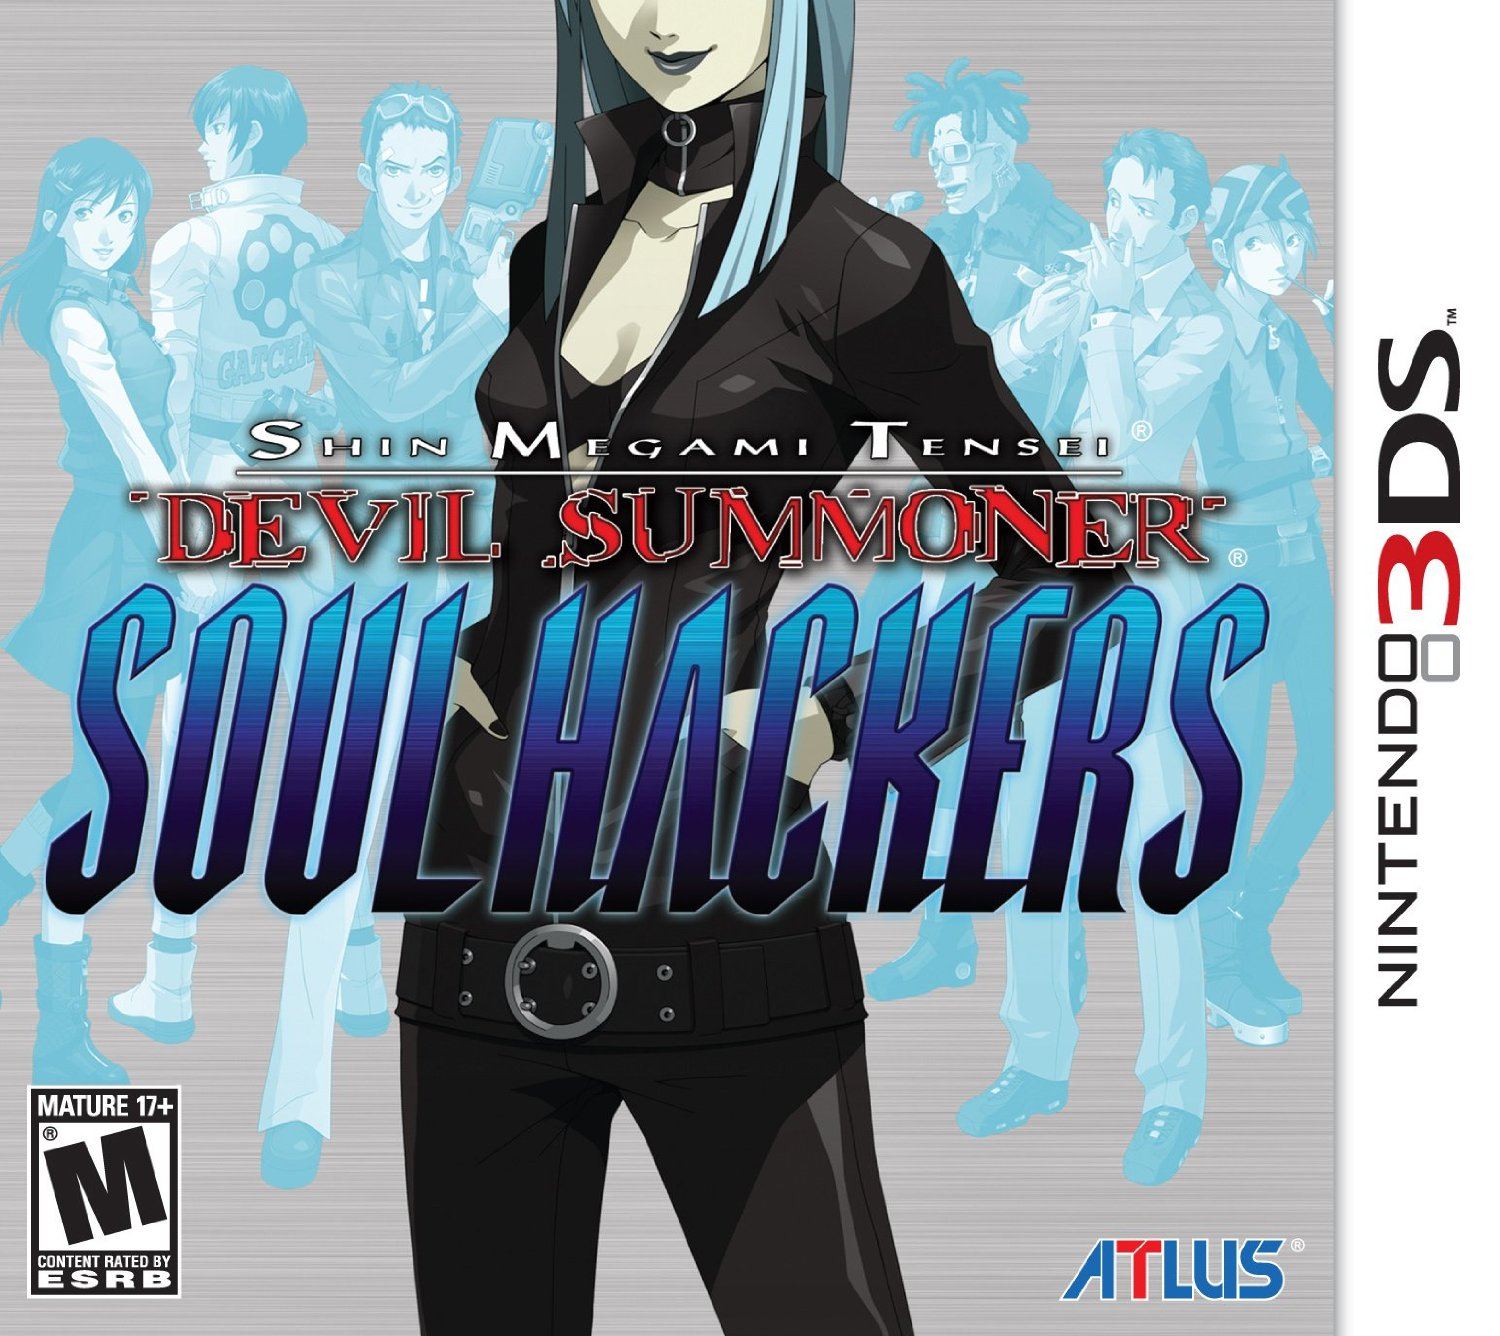 Shin Megami Tensei: Devil Summoner - Soul Hackers for Nintendo